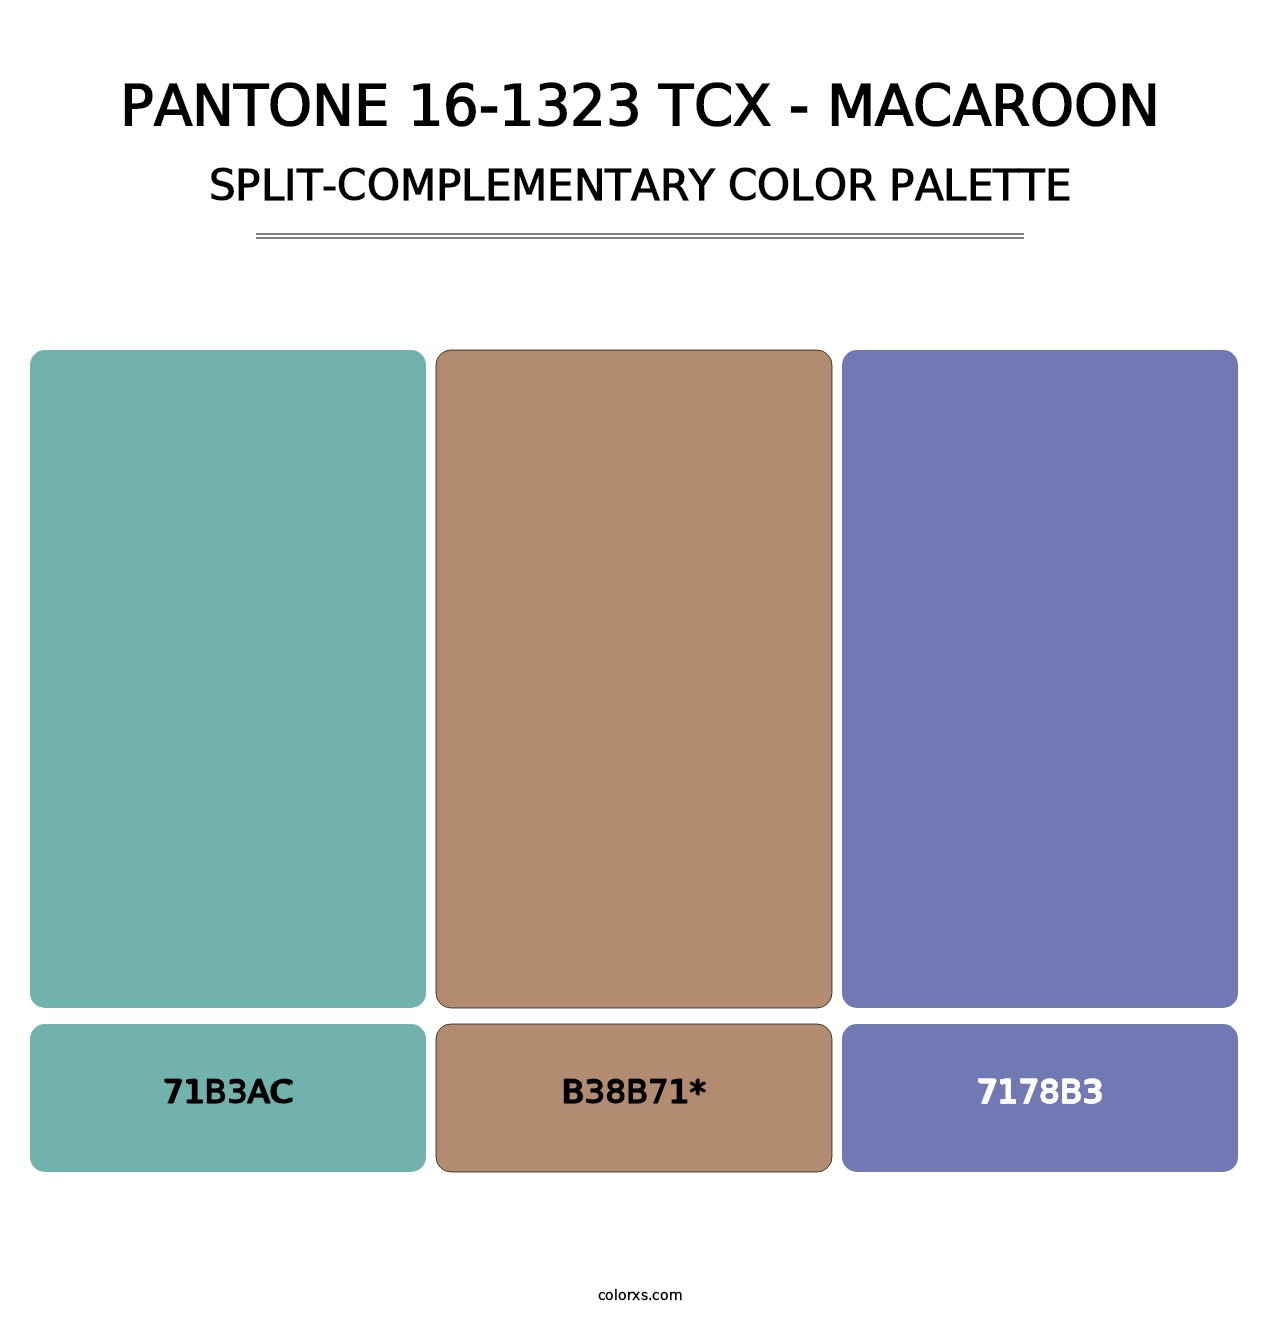 PANTONE 16-1323 TCX - Macaroon - Split-Complementary Color Palette